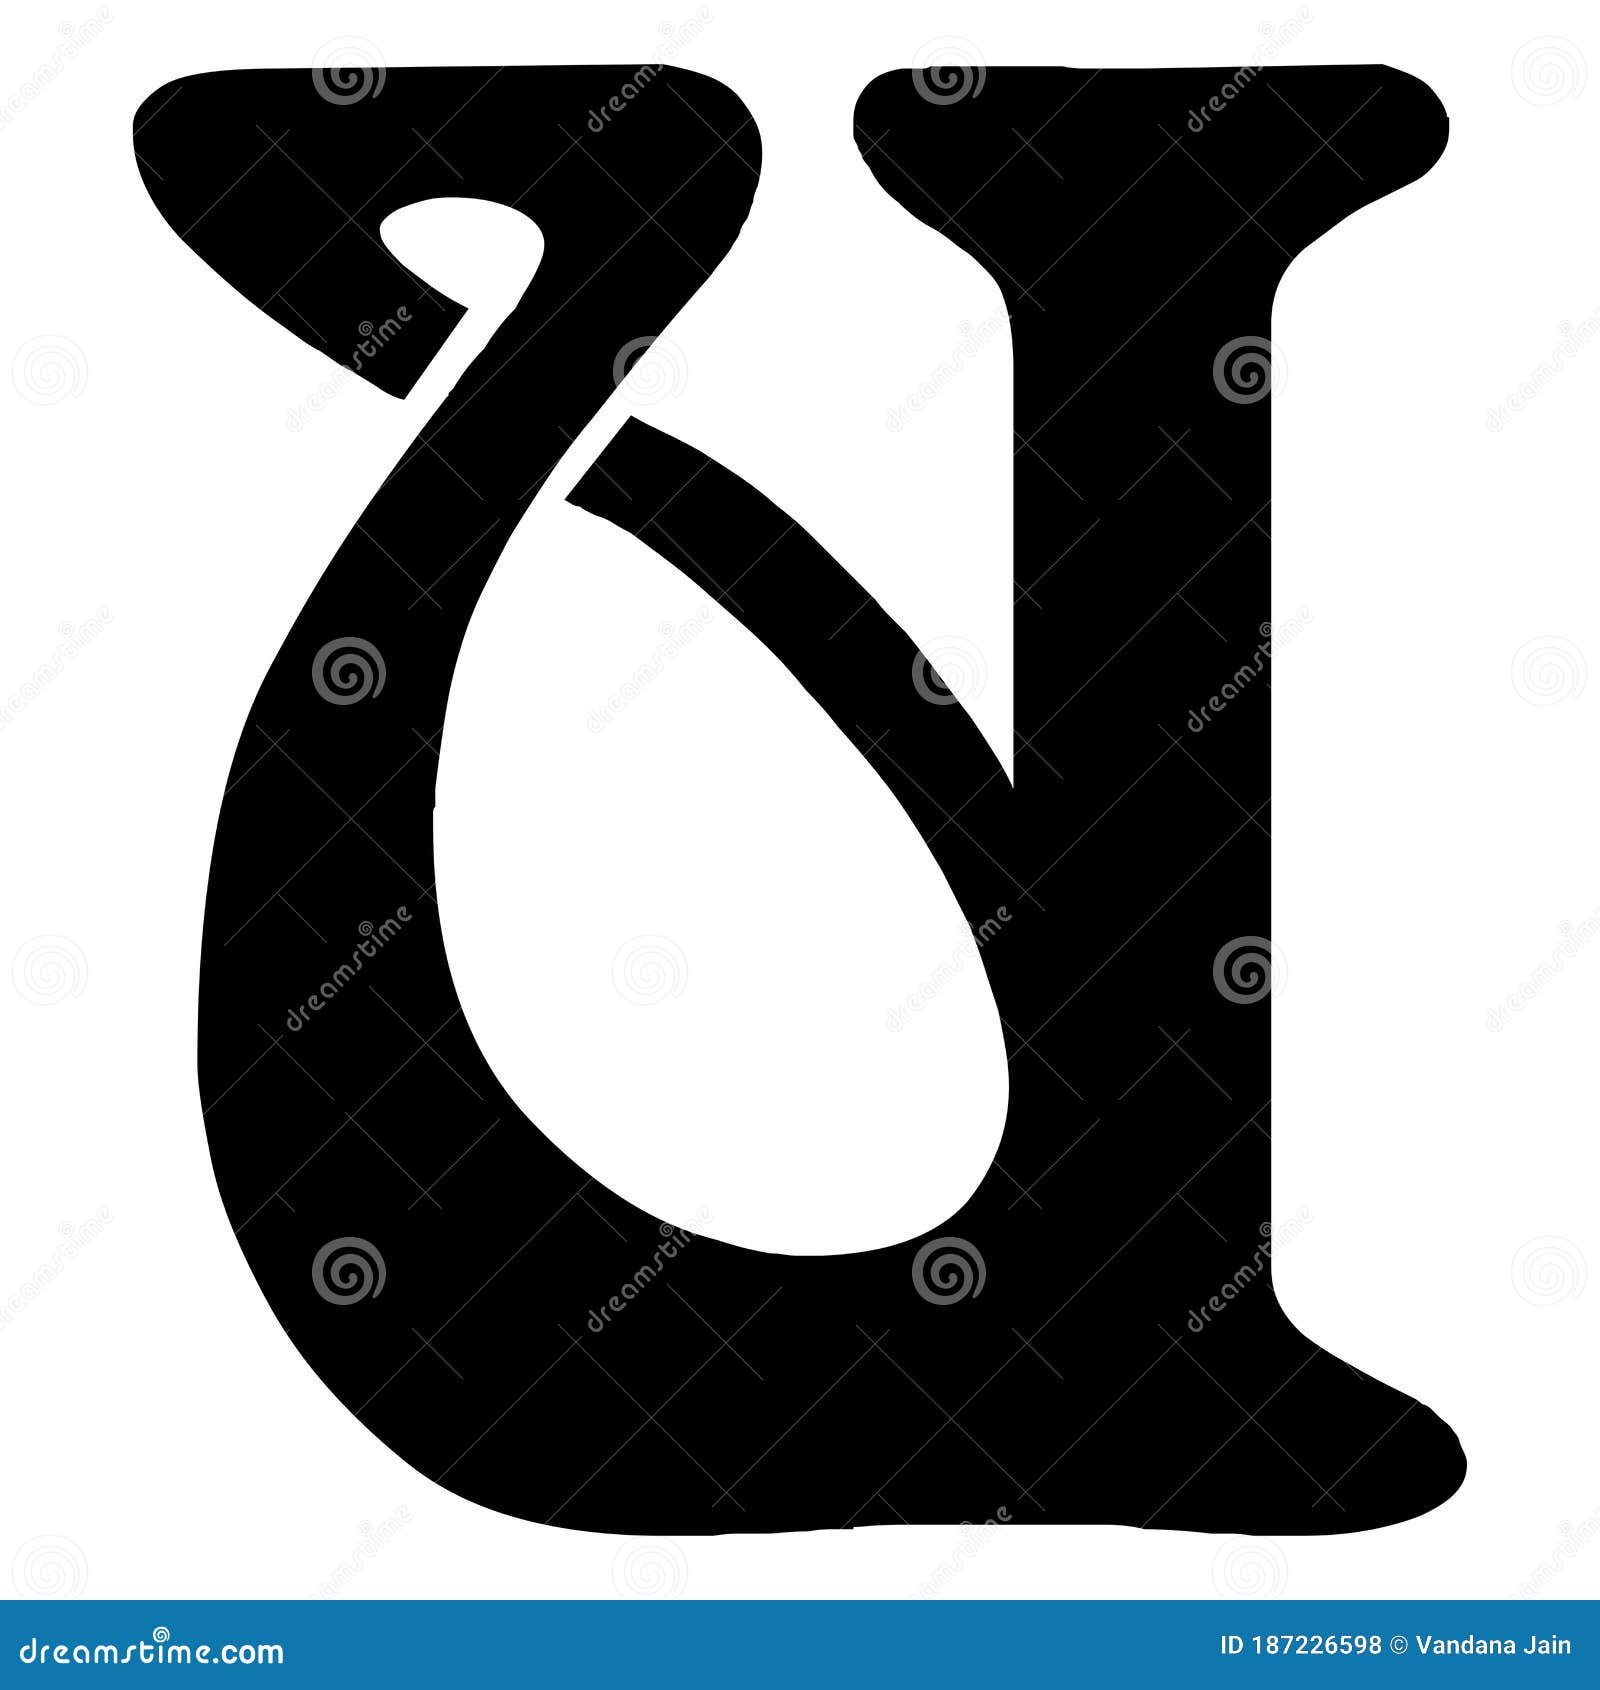 Alphabet Symbol - Stylish Letter  Font Symbol of   on White Background. Stock Illustration - Illustration of elementary, letter:  187226598